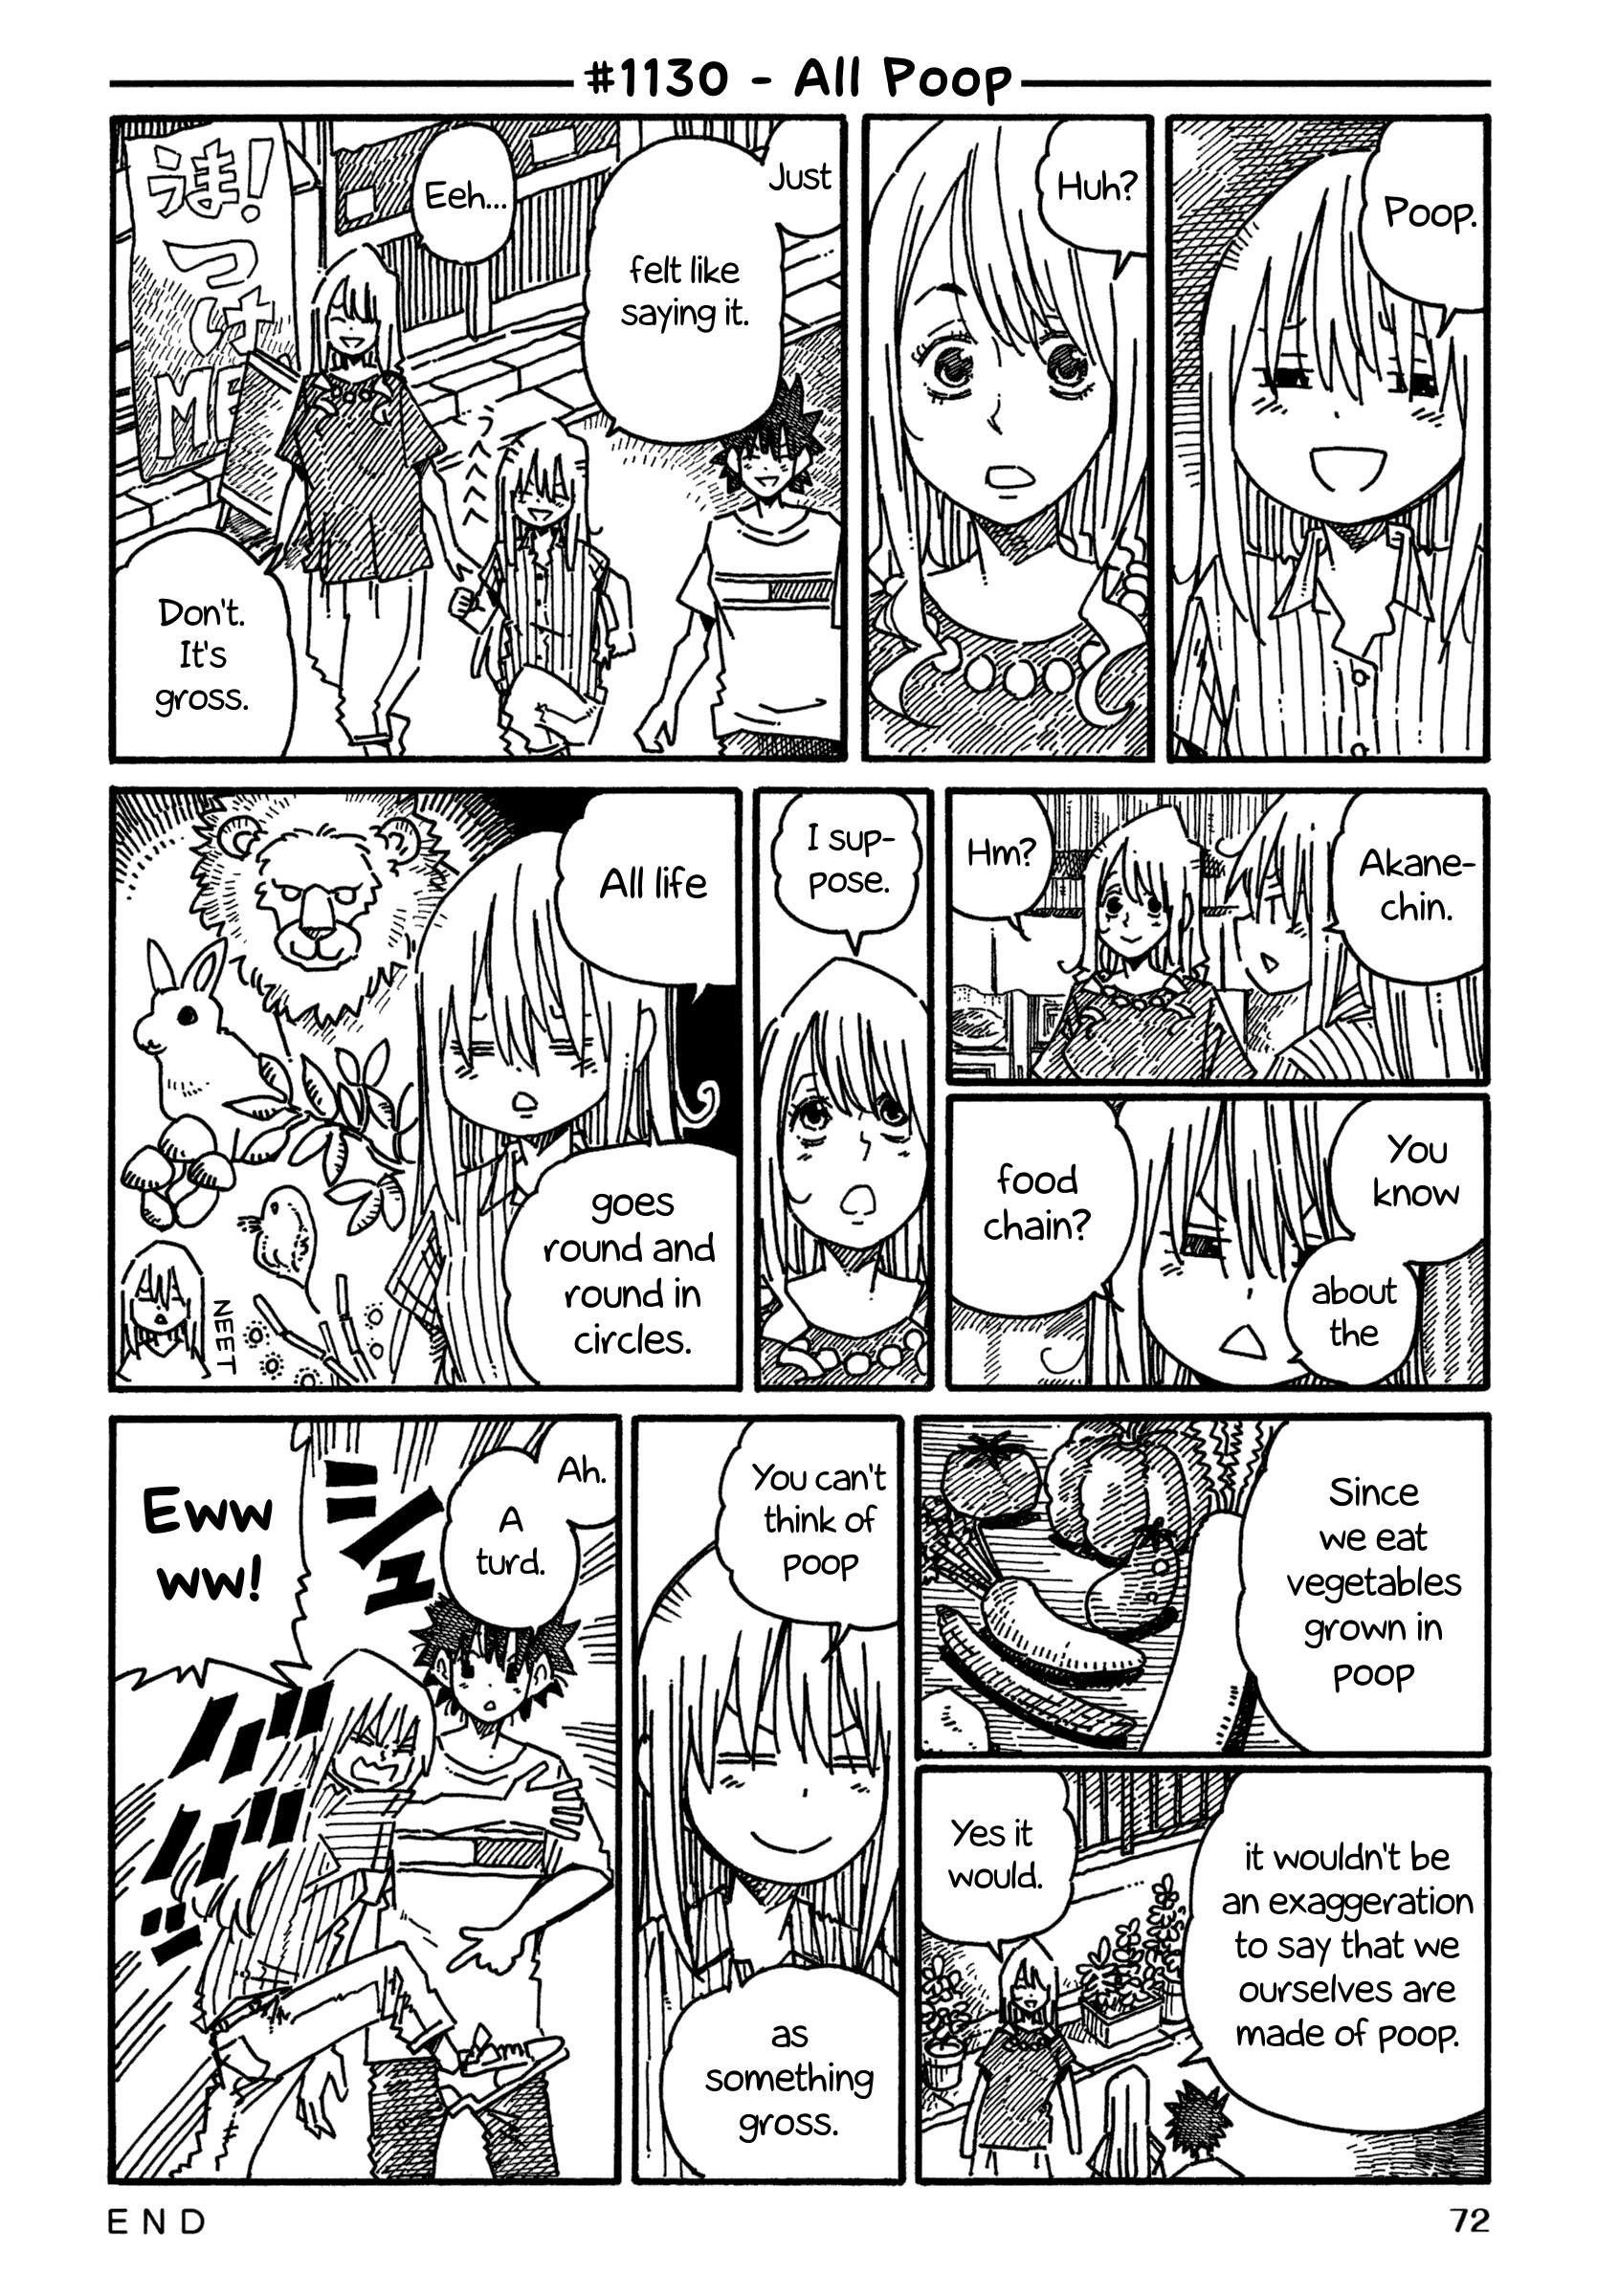 Manga Chapter of the Week: Giant Killing Chapter 139